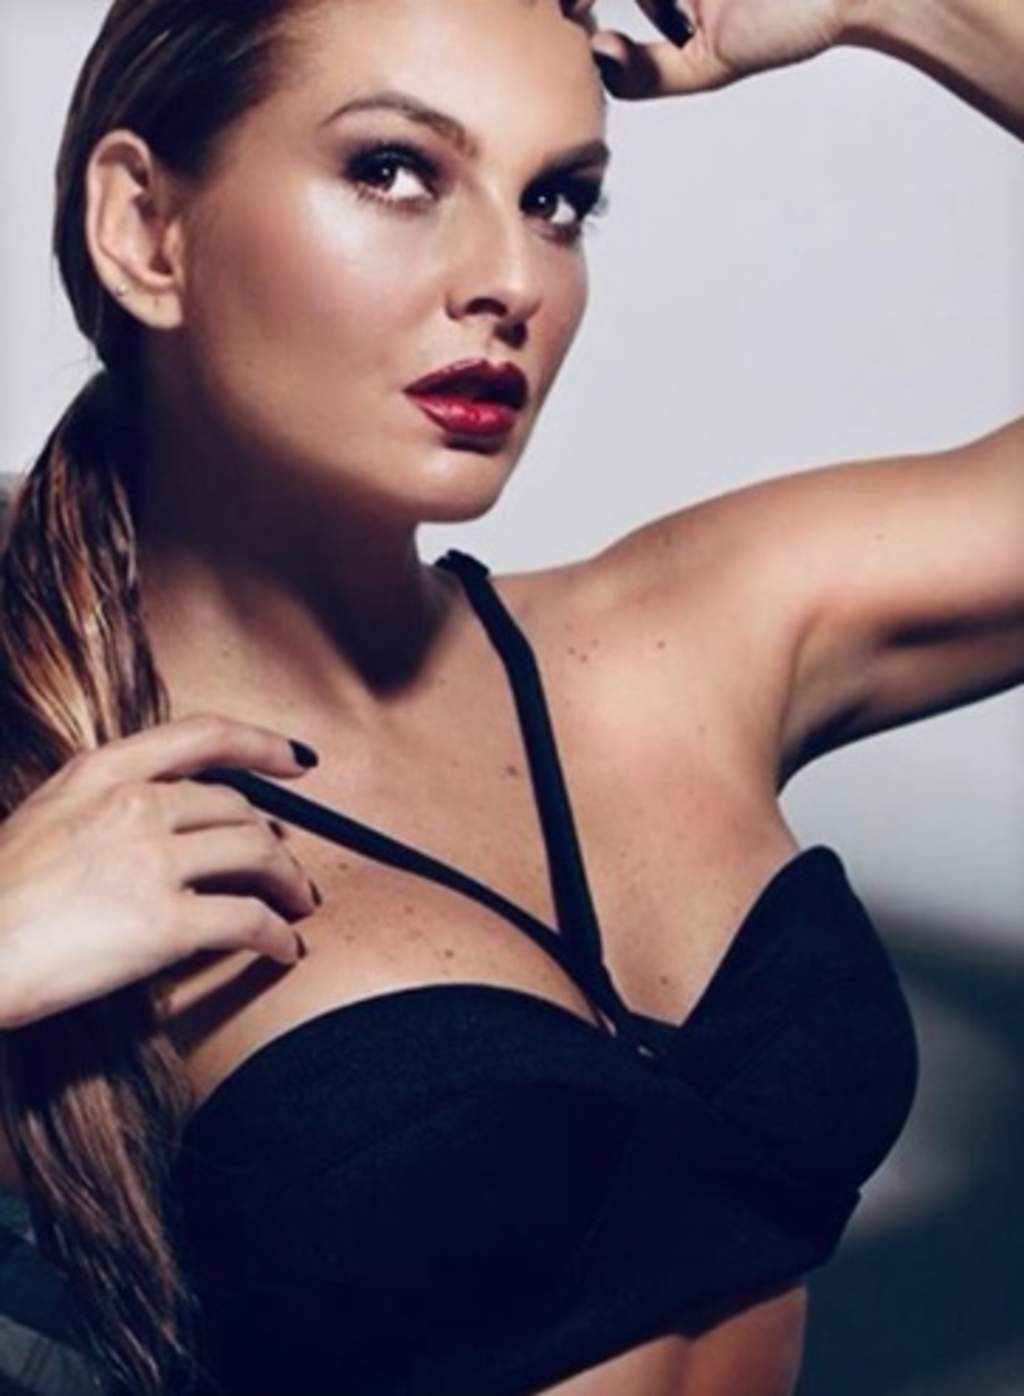 Marjorie de Sousa sorprende con un sexy escote en Instagram